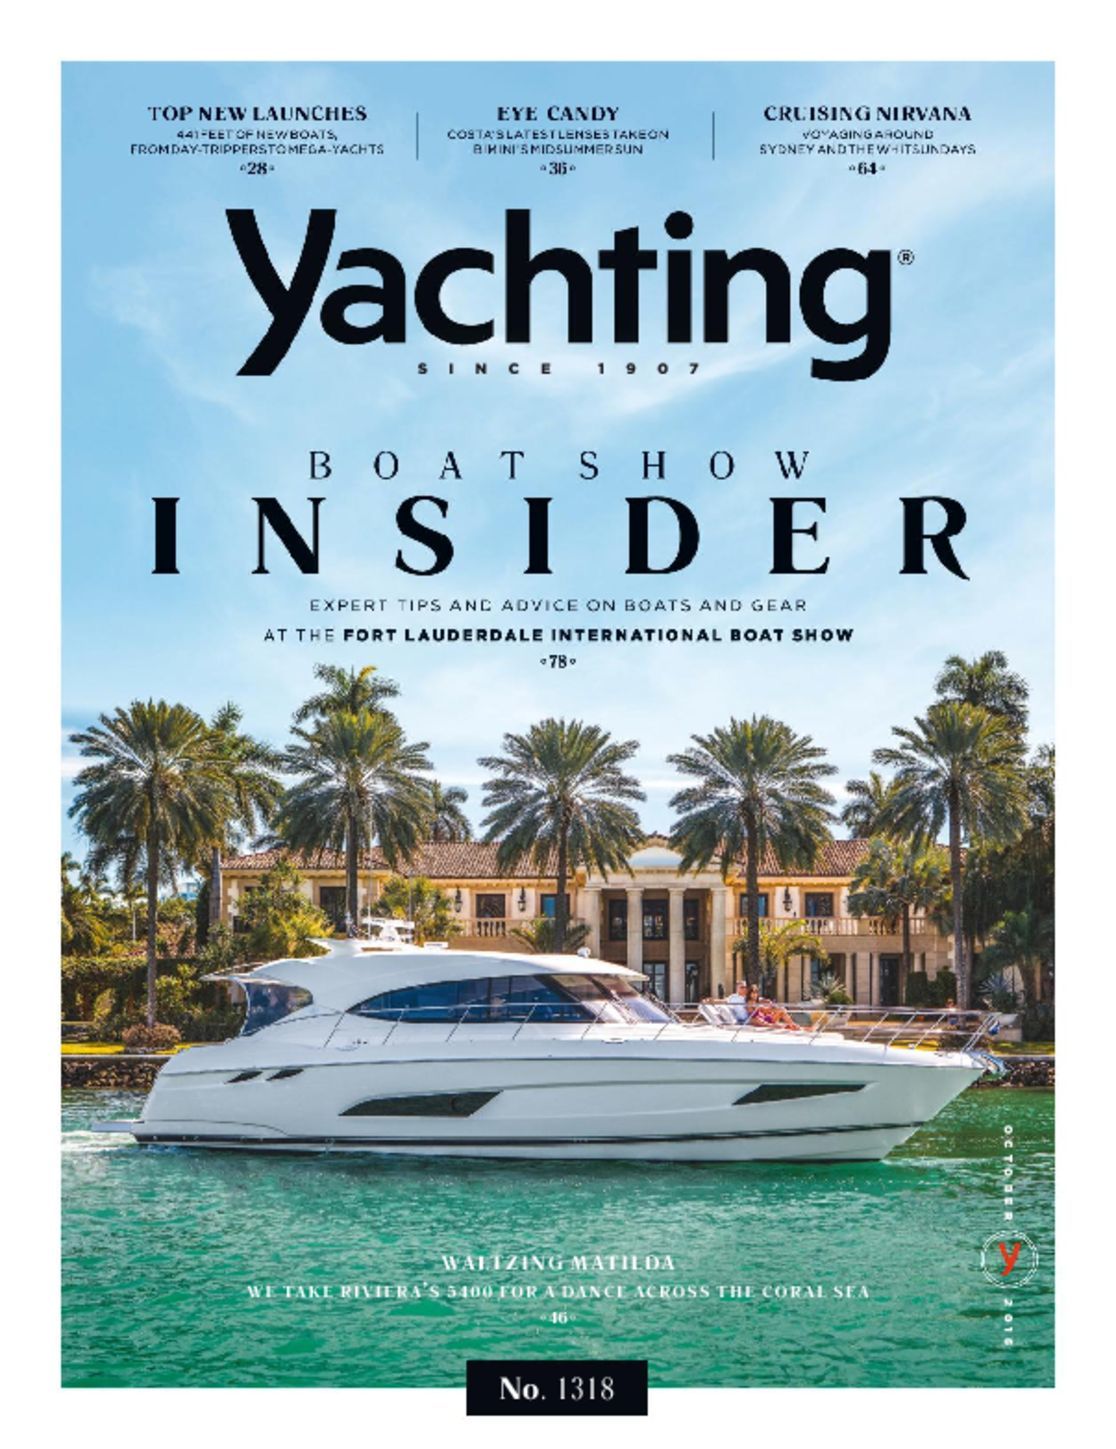 yachts & yachting magazine